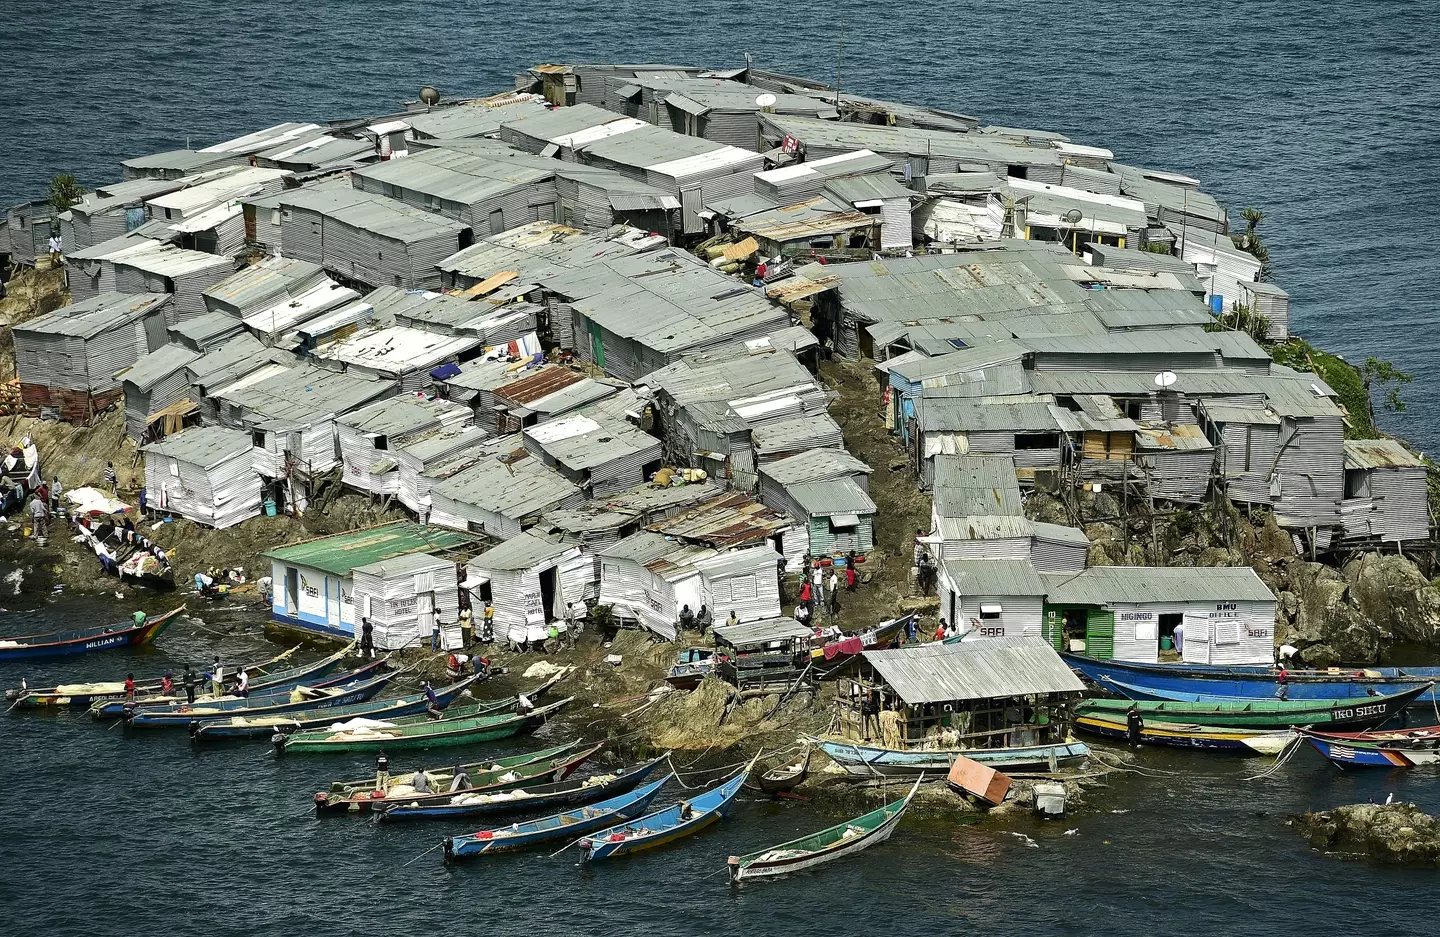 Migingo Island is home to over 500 people. (CARL DE SOUZA/AFP via Getty Images)